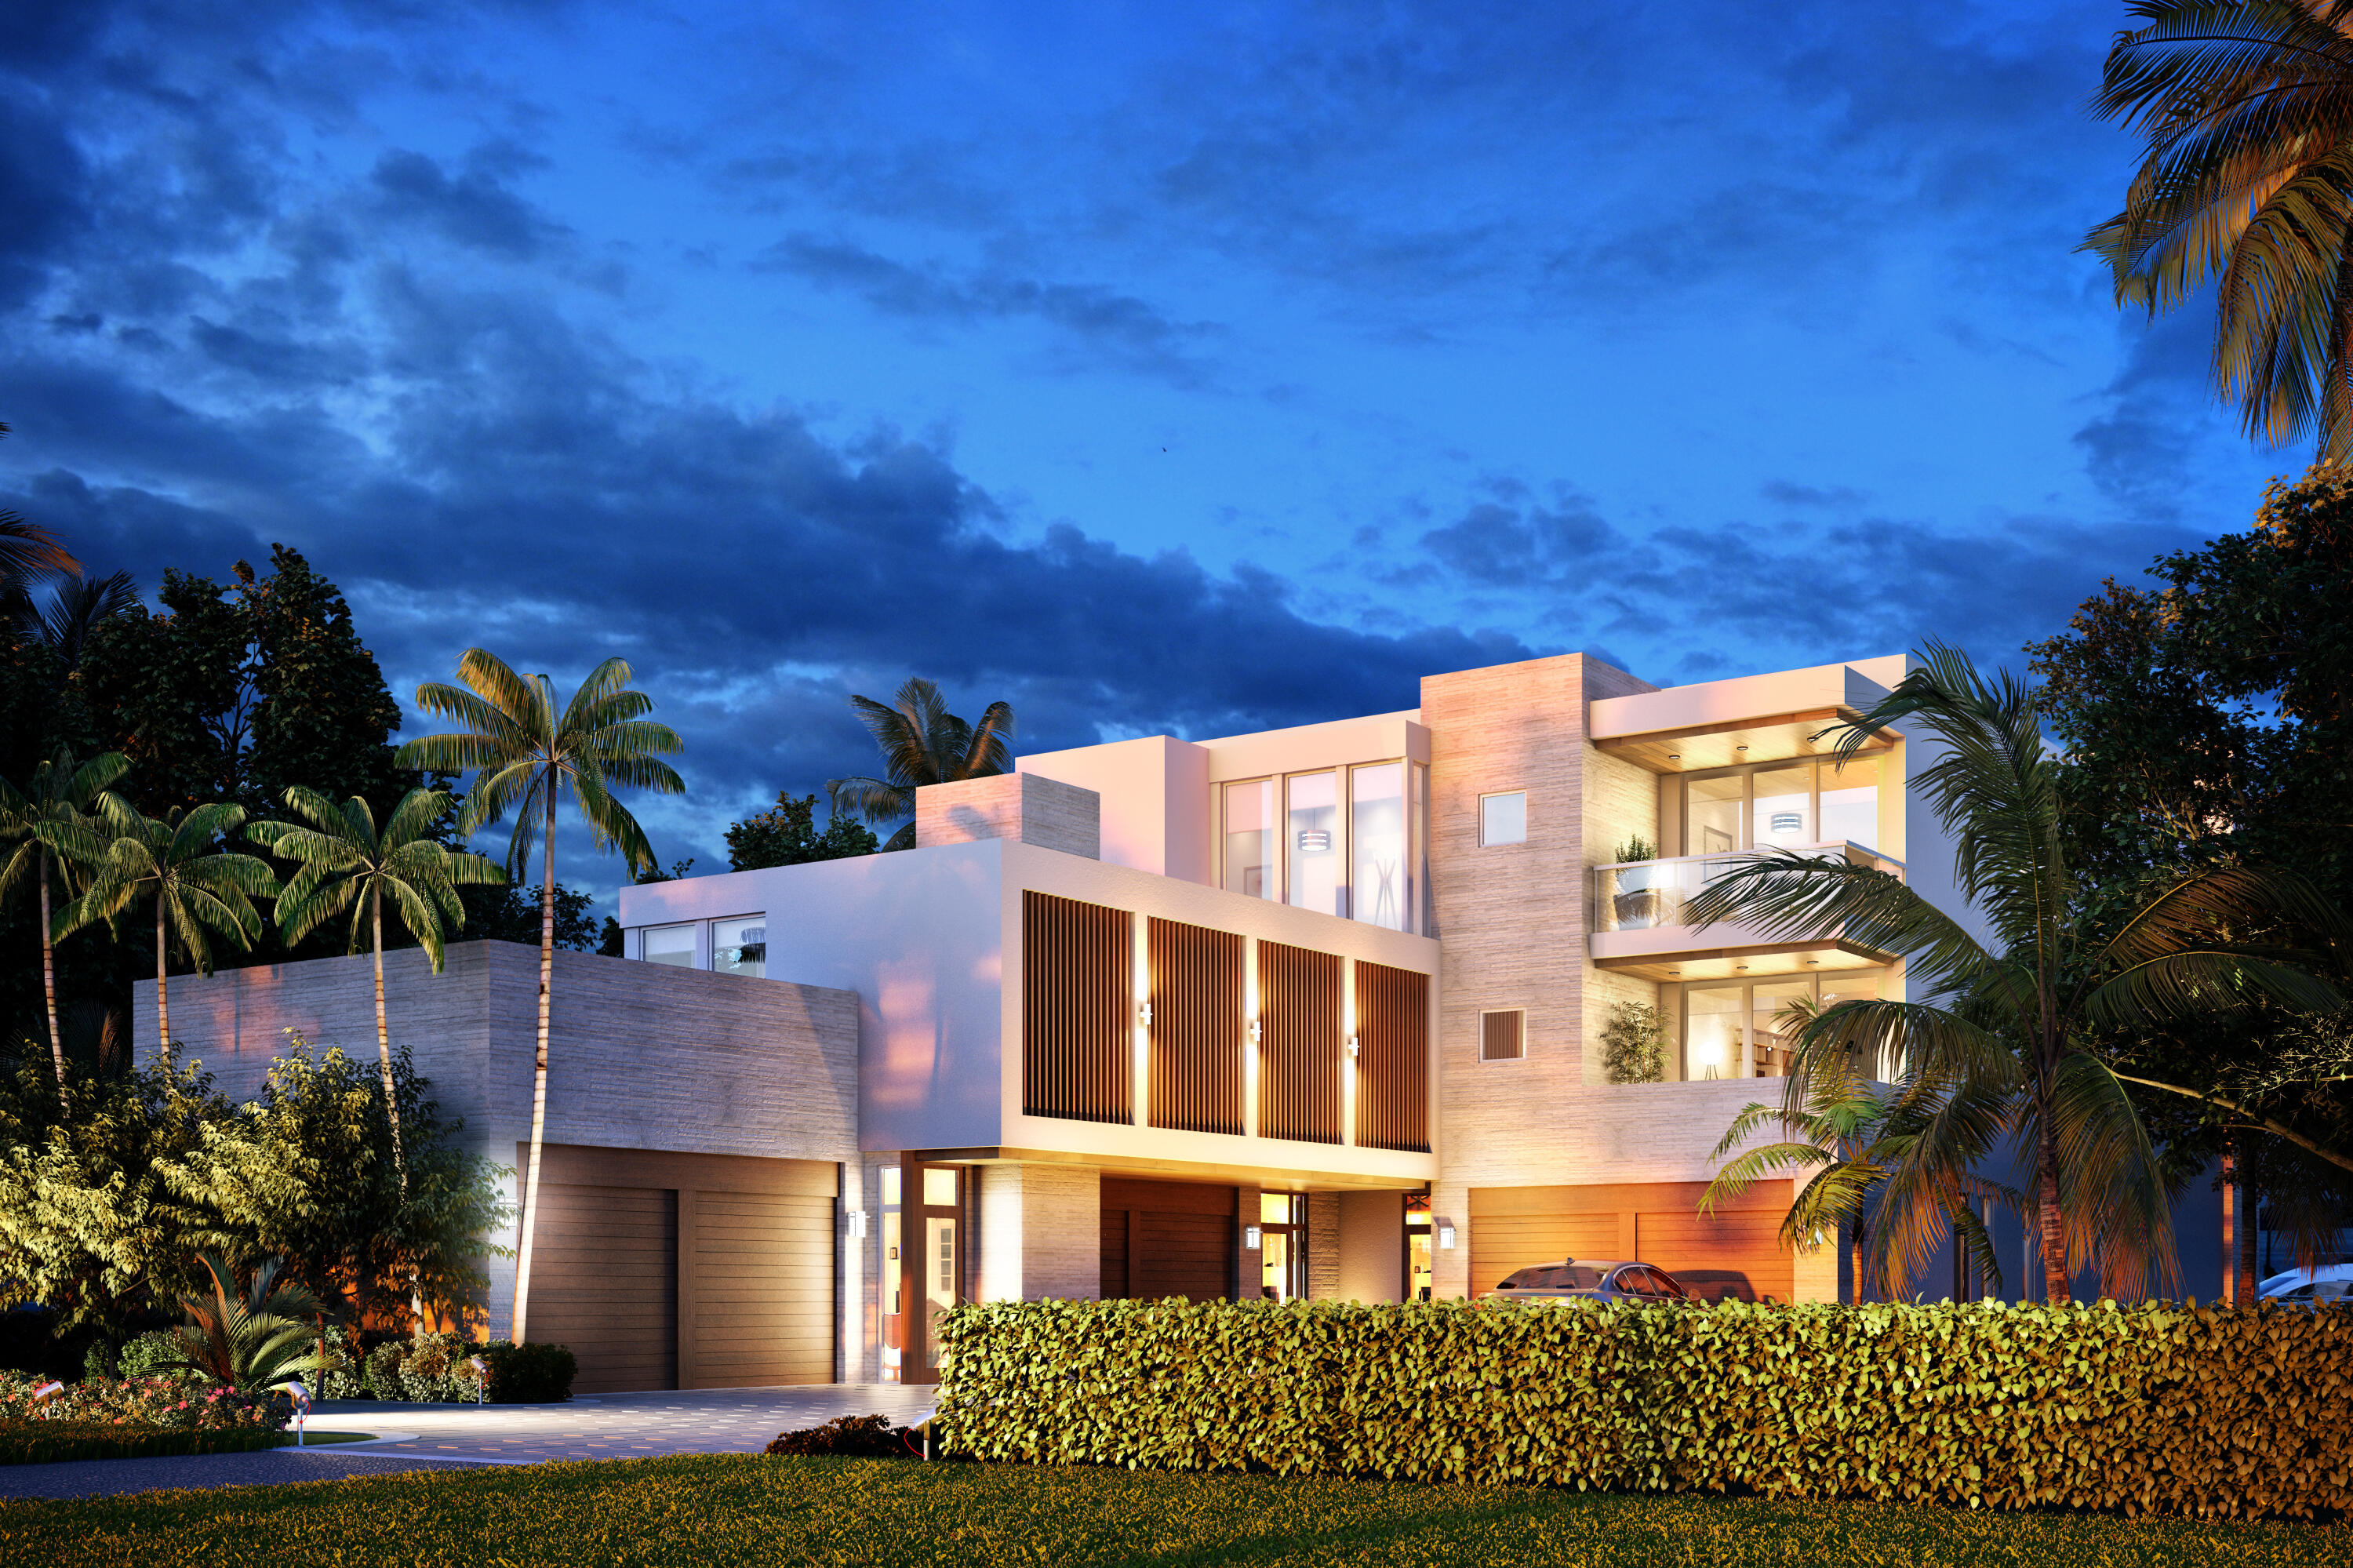 Property for Sale at 900 Lago Mar Lane 300, Boca Raton, Palm Beach County, Florida - Bedrooms: 4 
Bathrooms: 4.5  - $7,450,000